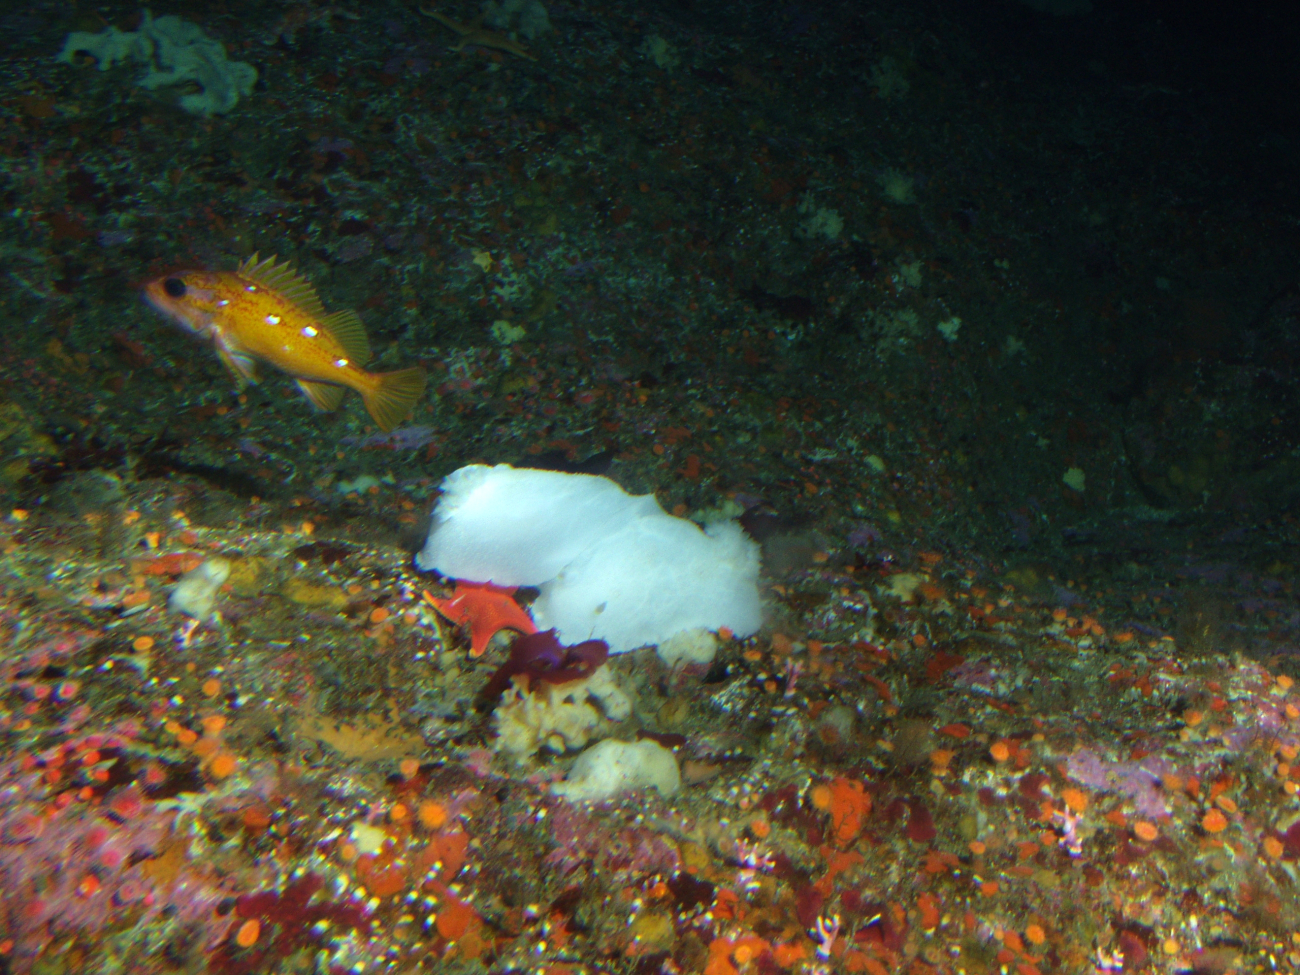 Rosy rockfish (Sebastes rosaceus) in rocky reef habitatat 90 meters depth